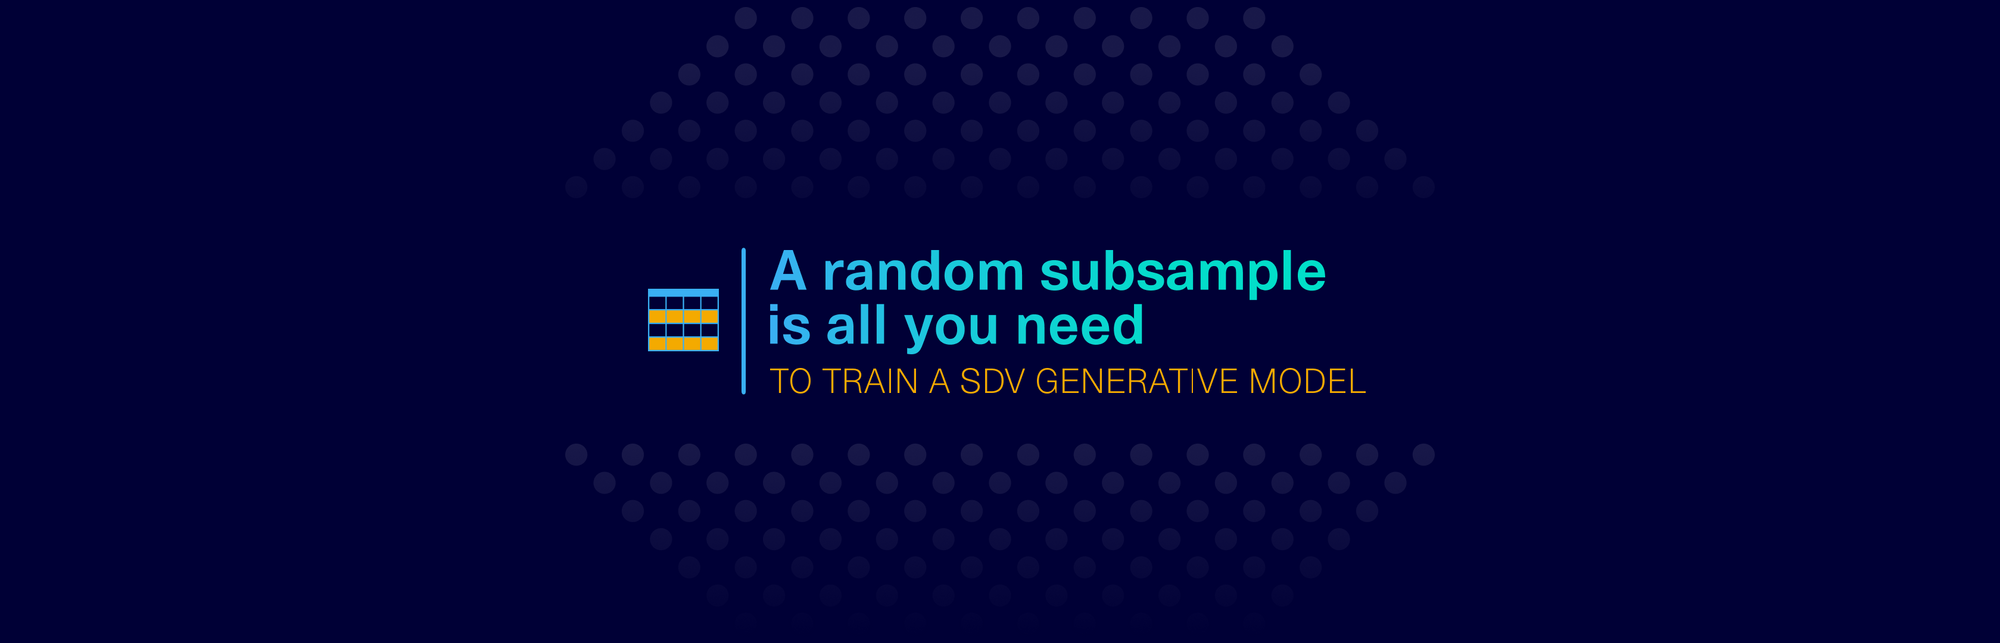 Train an SDV Generative AI: A random subsample is all you need